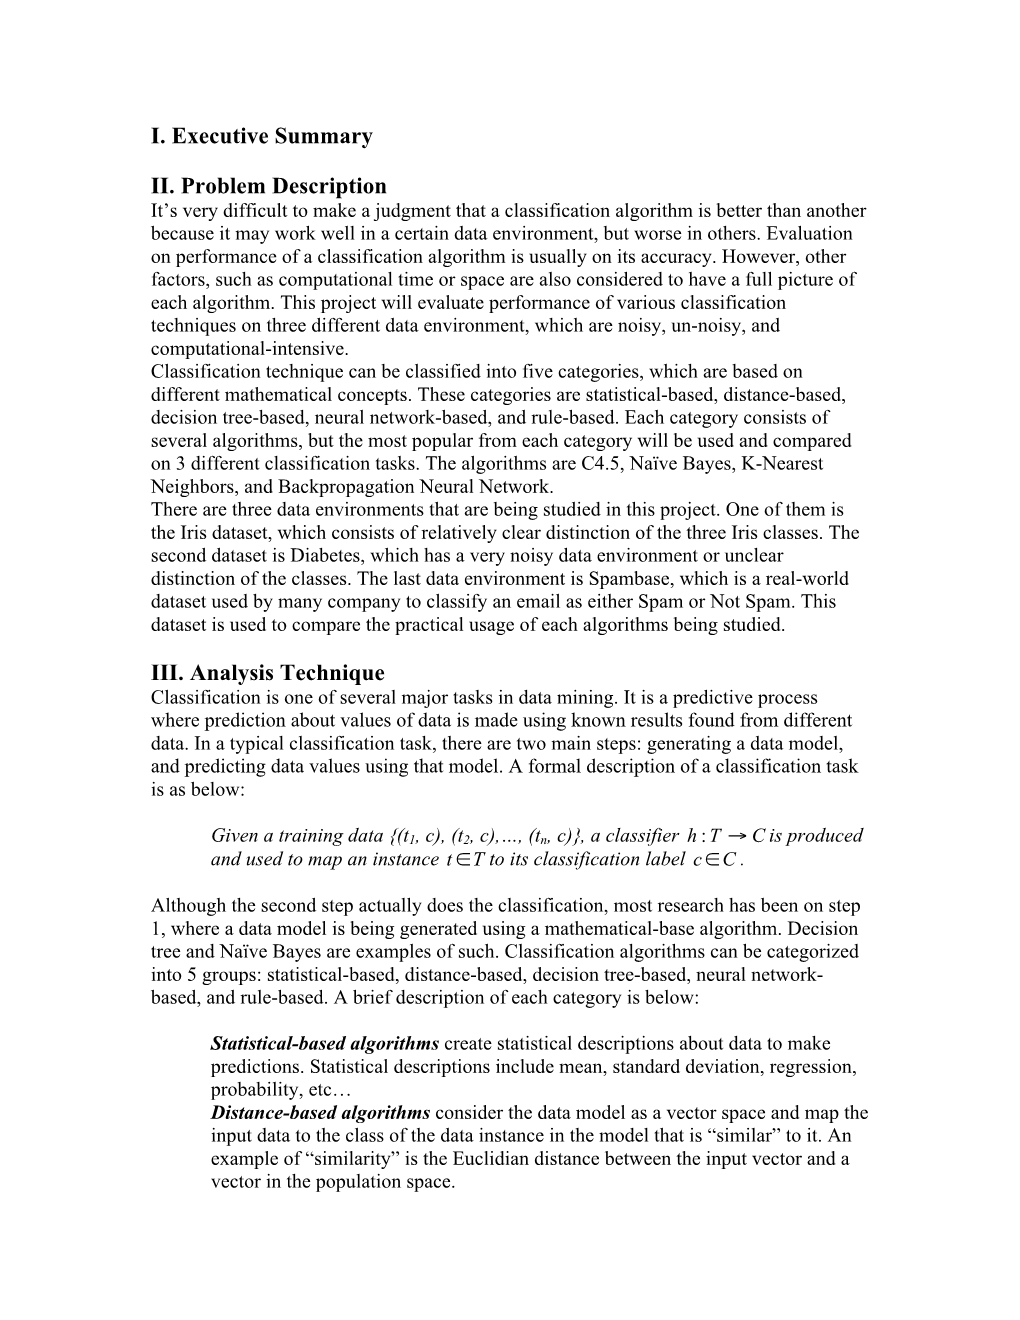 I. Executive Summary II. Problem Description III. Analysis Technique